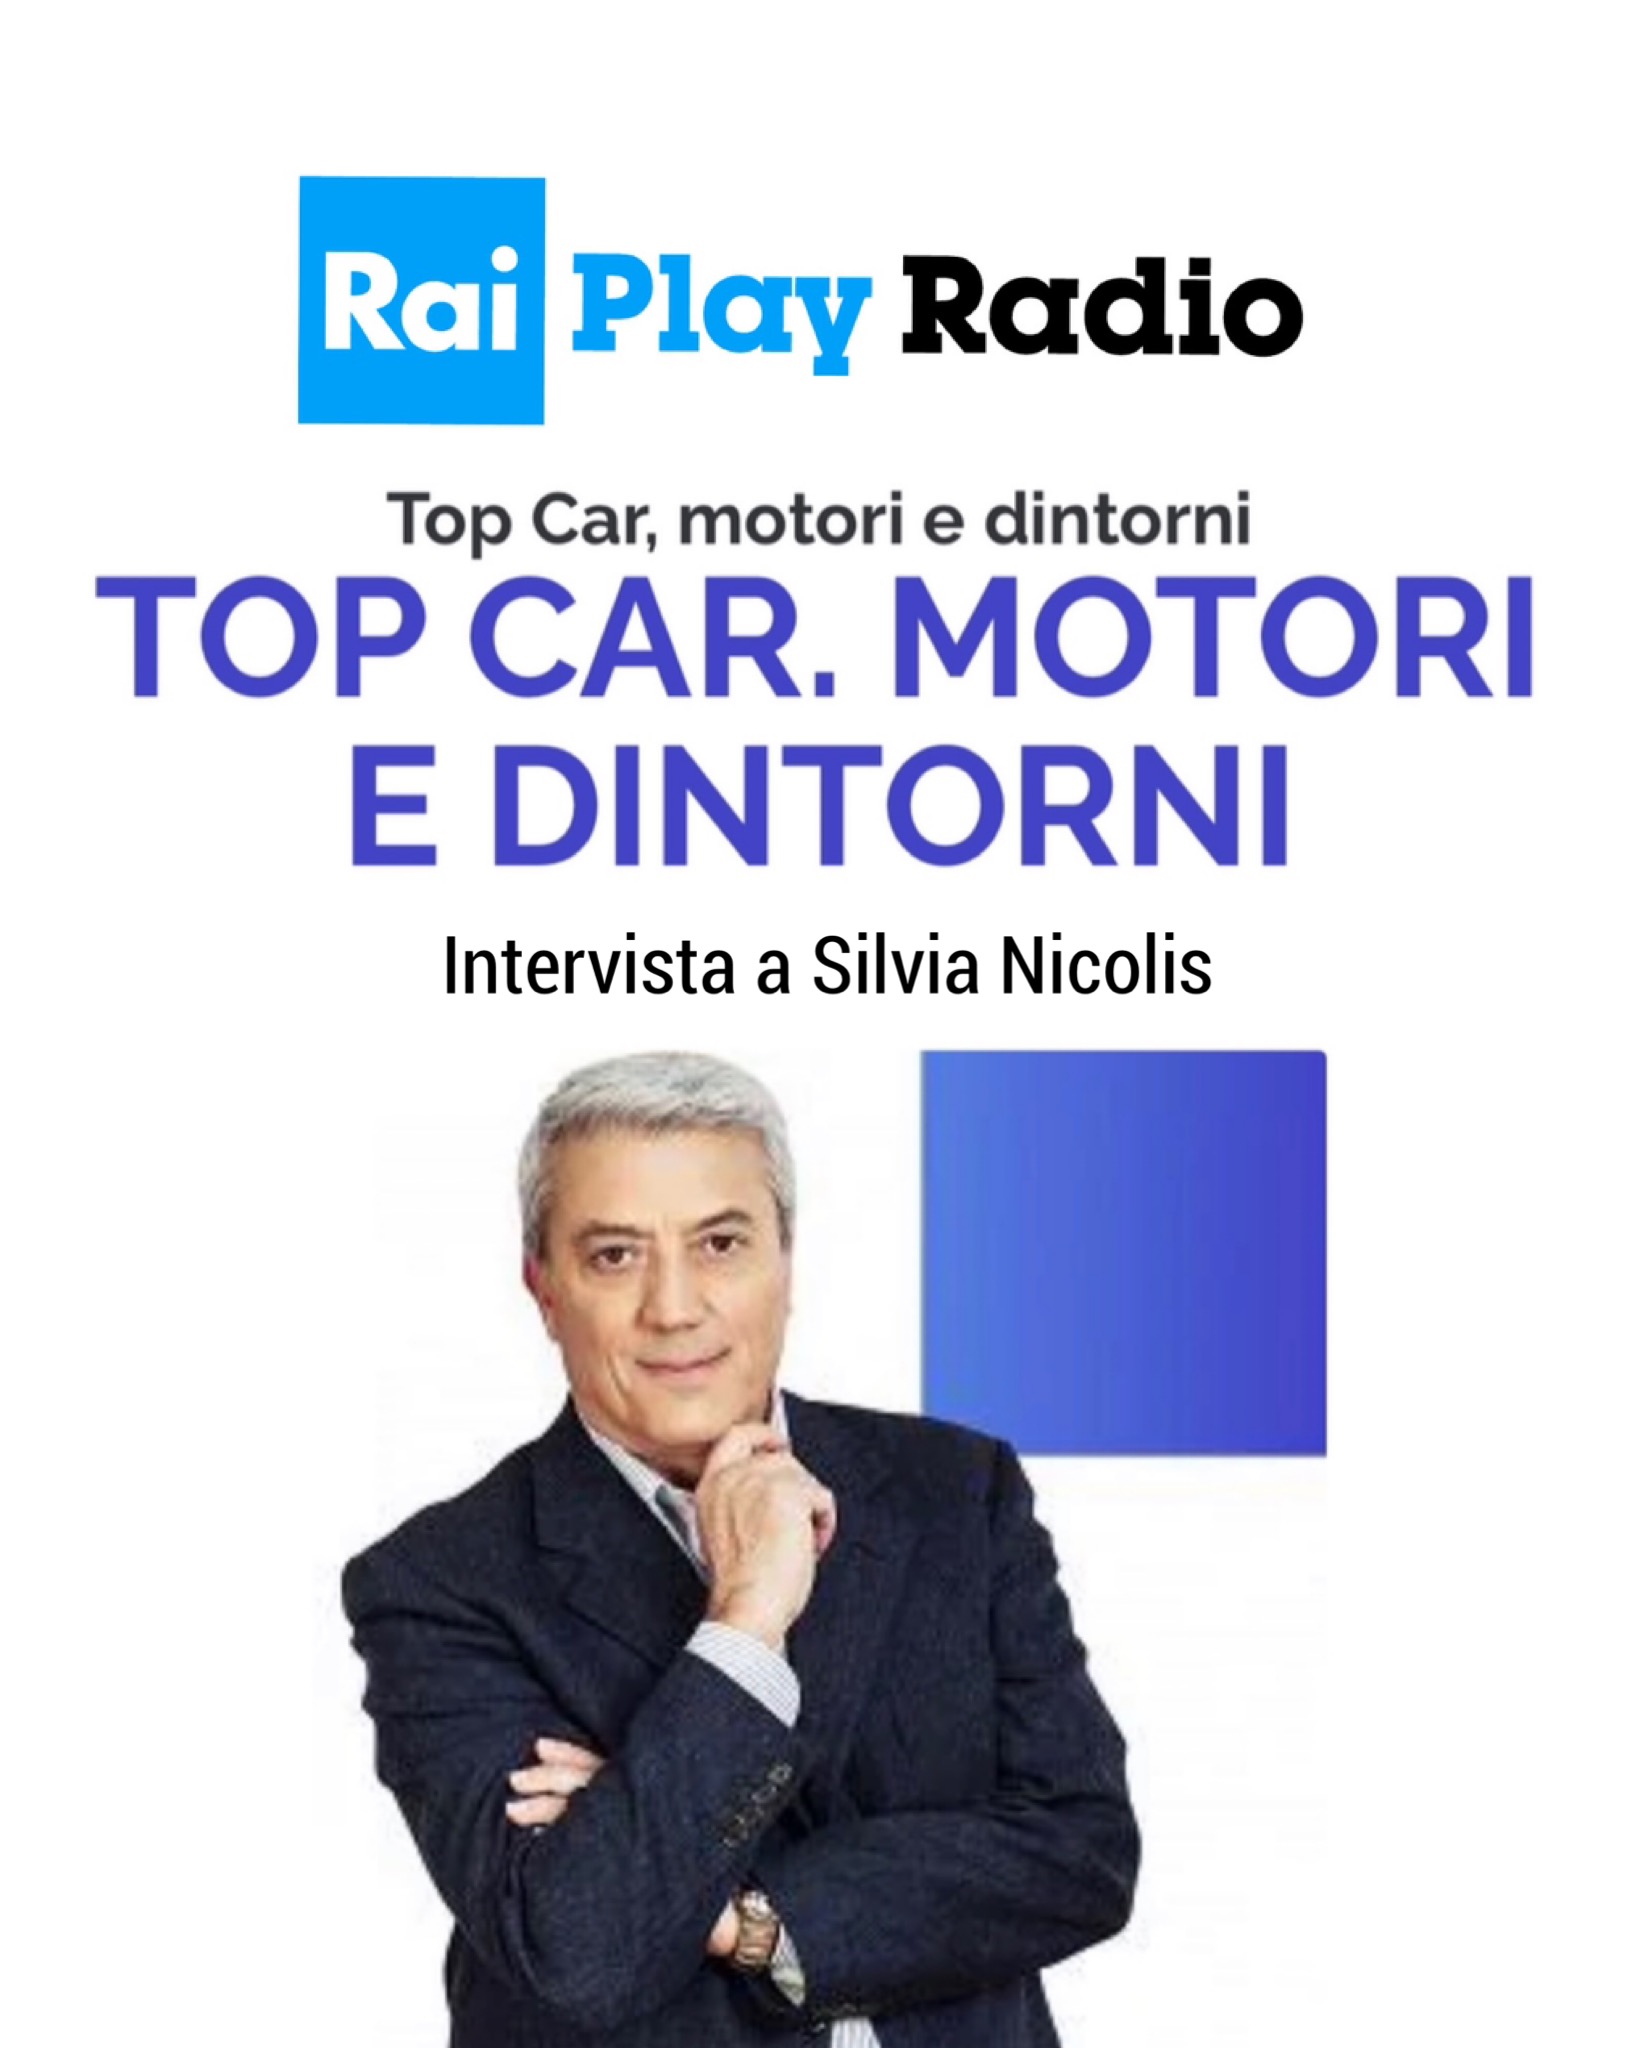 RaiPlayRadio, Top Car, interview with Silvia Nicolis.